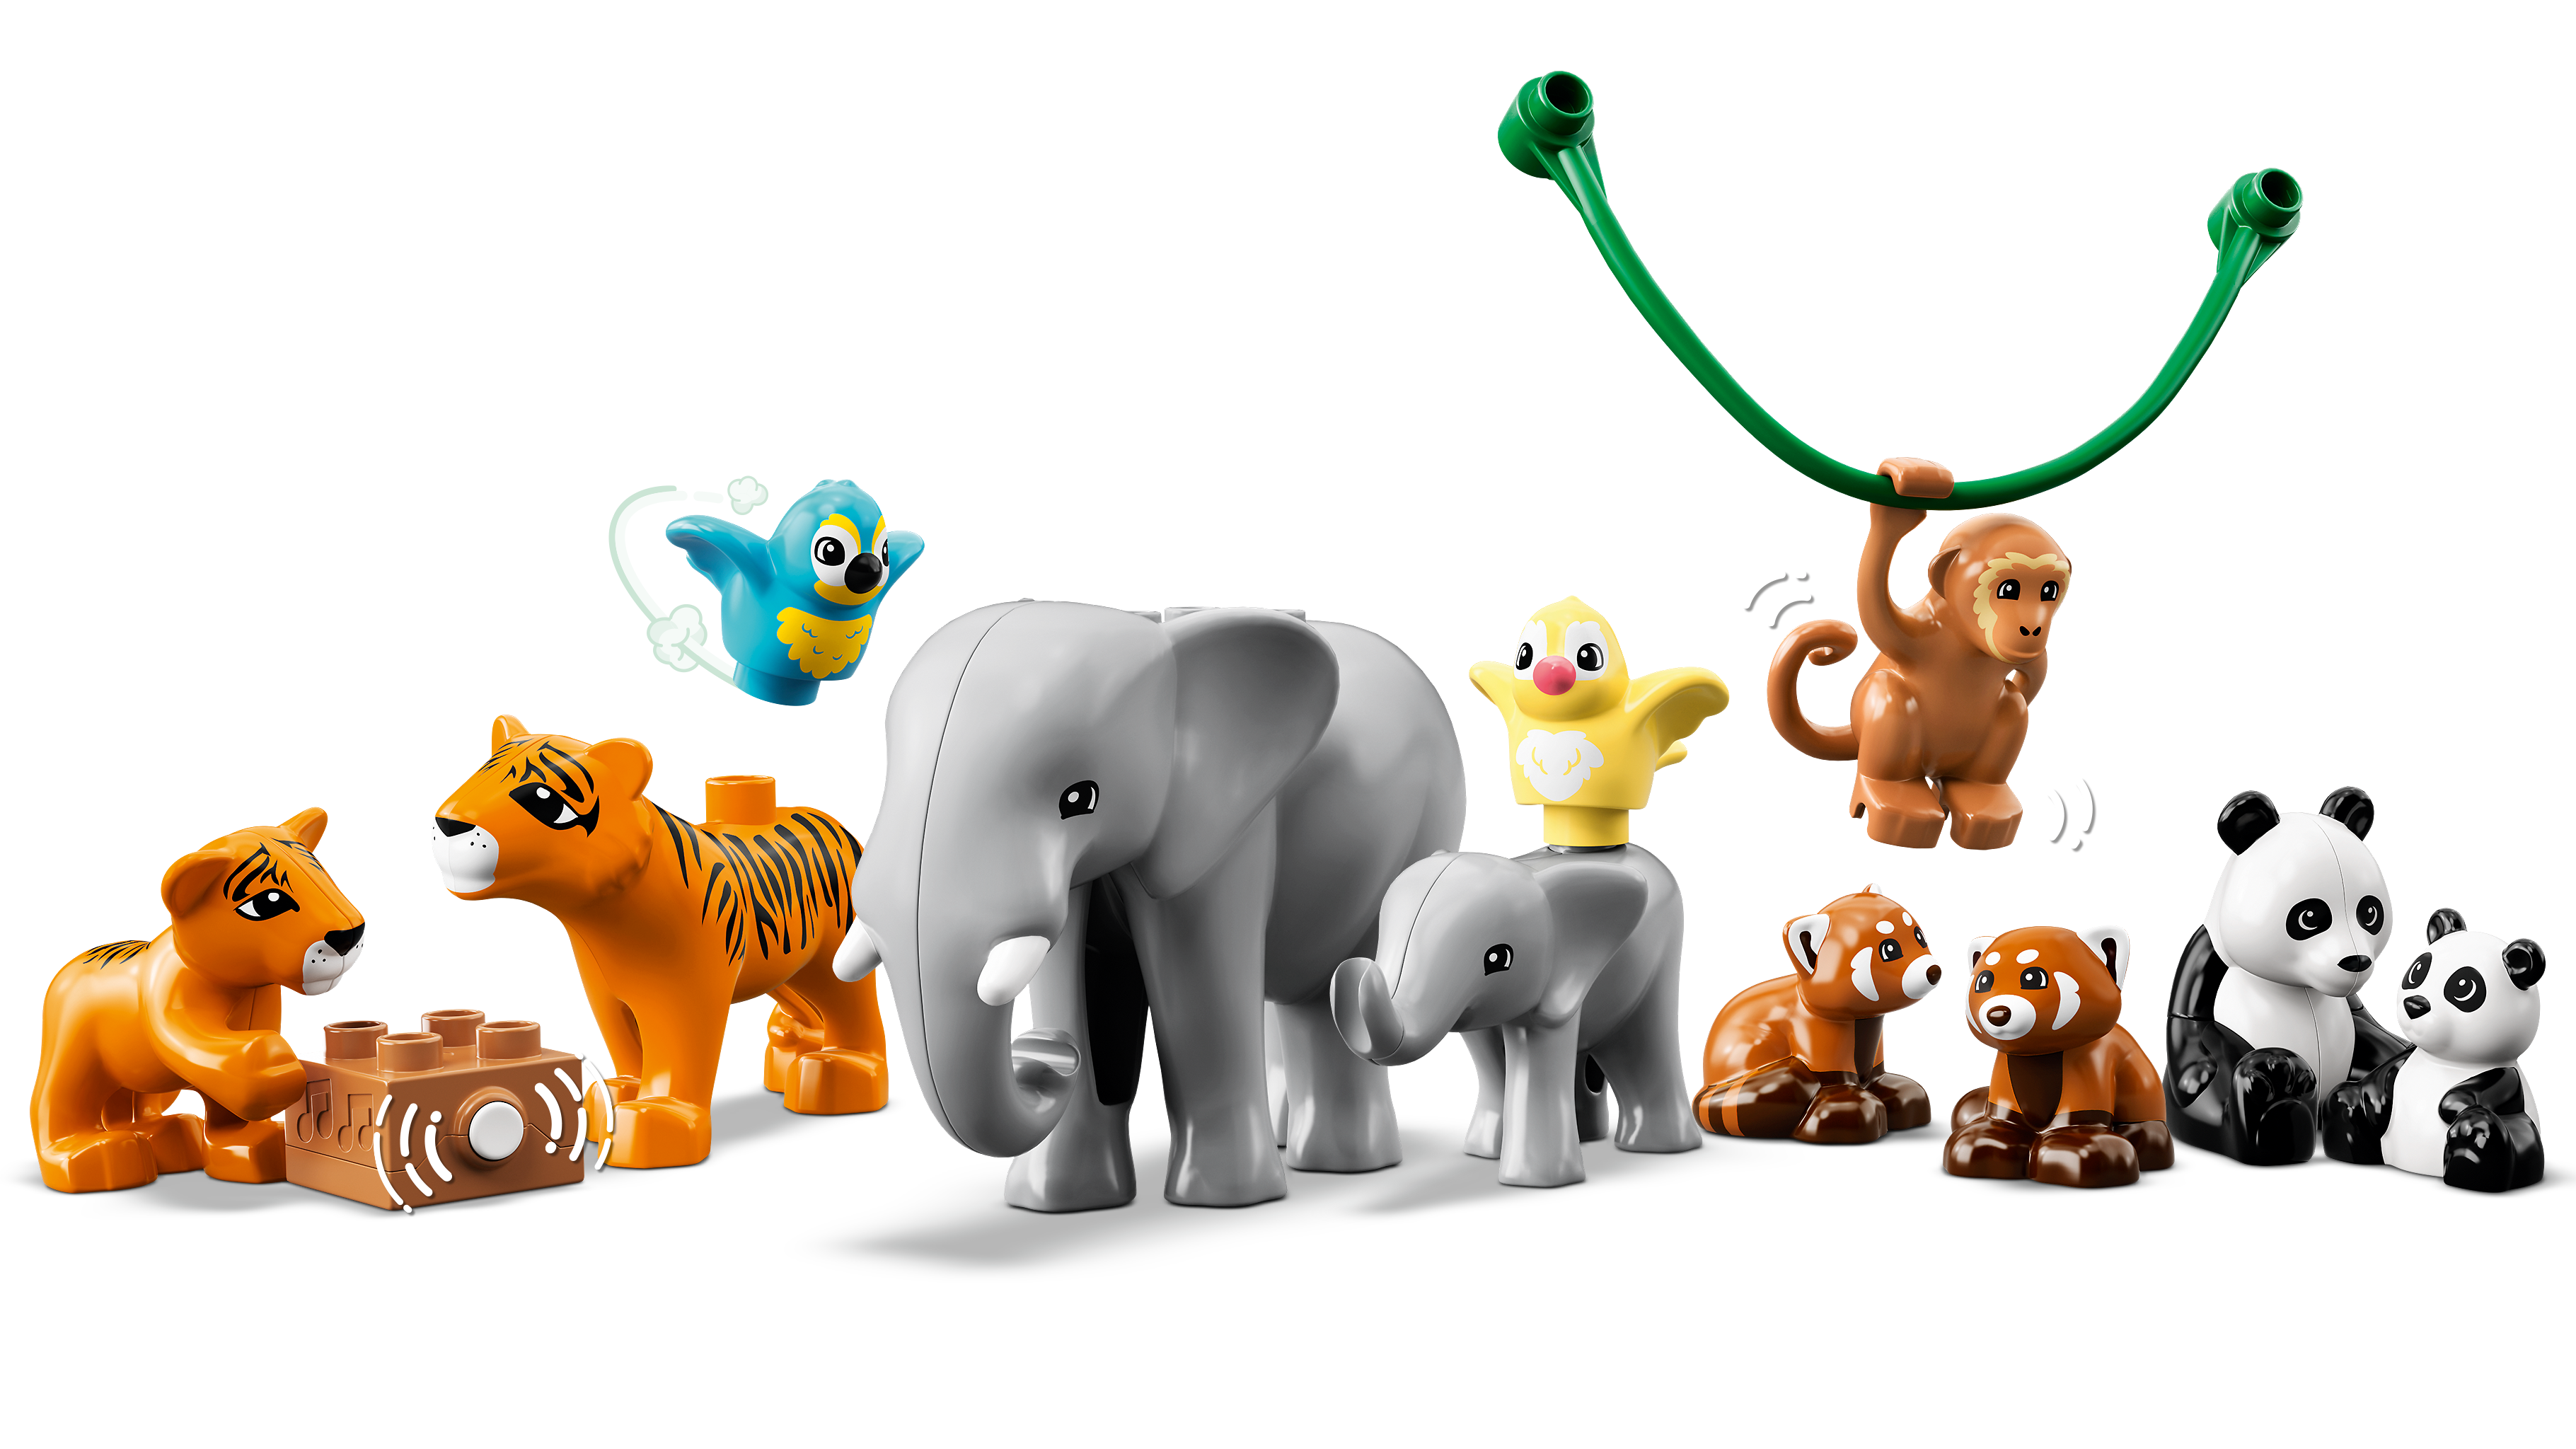 Lego 10974 Wild Animals of Asia